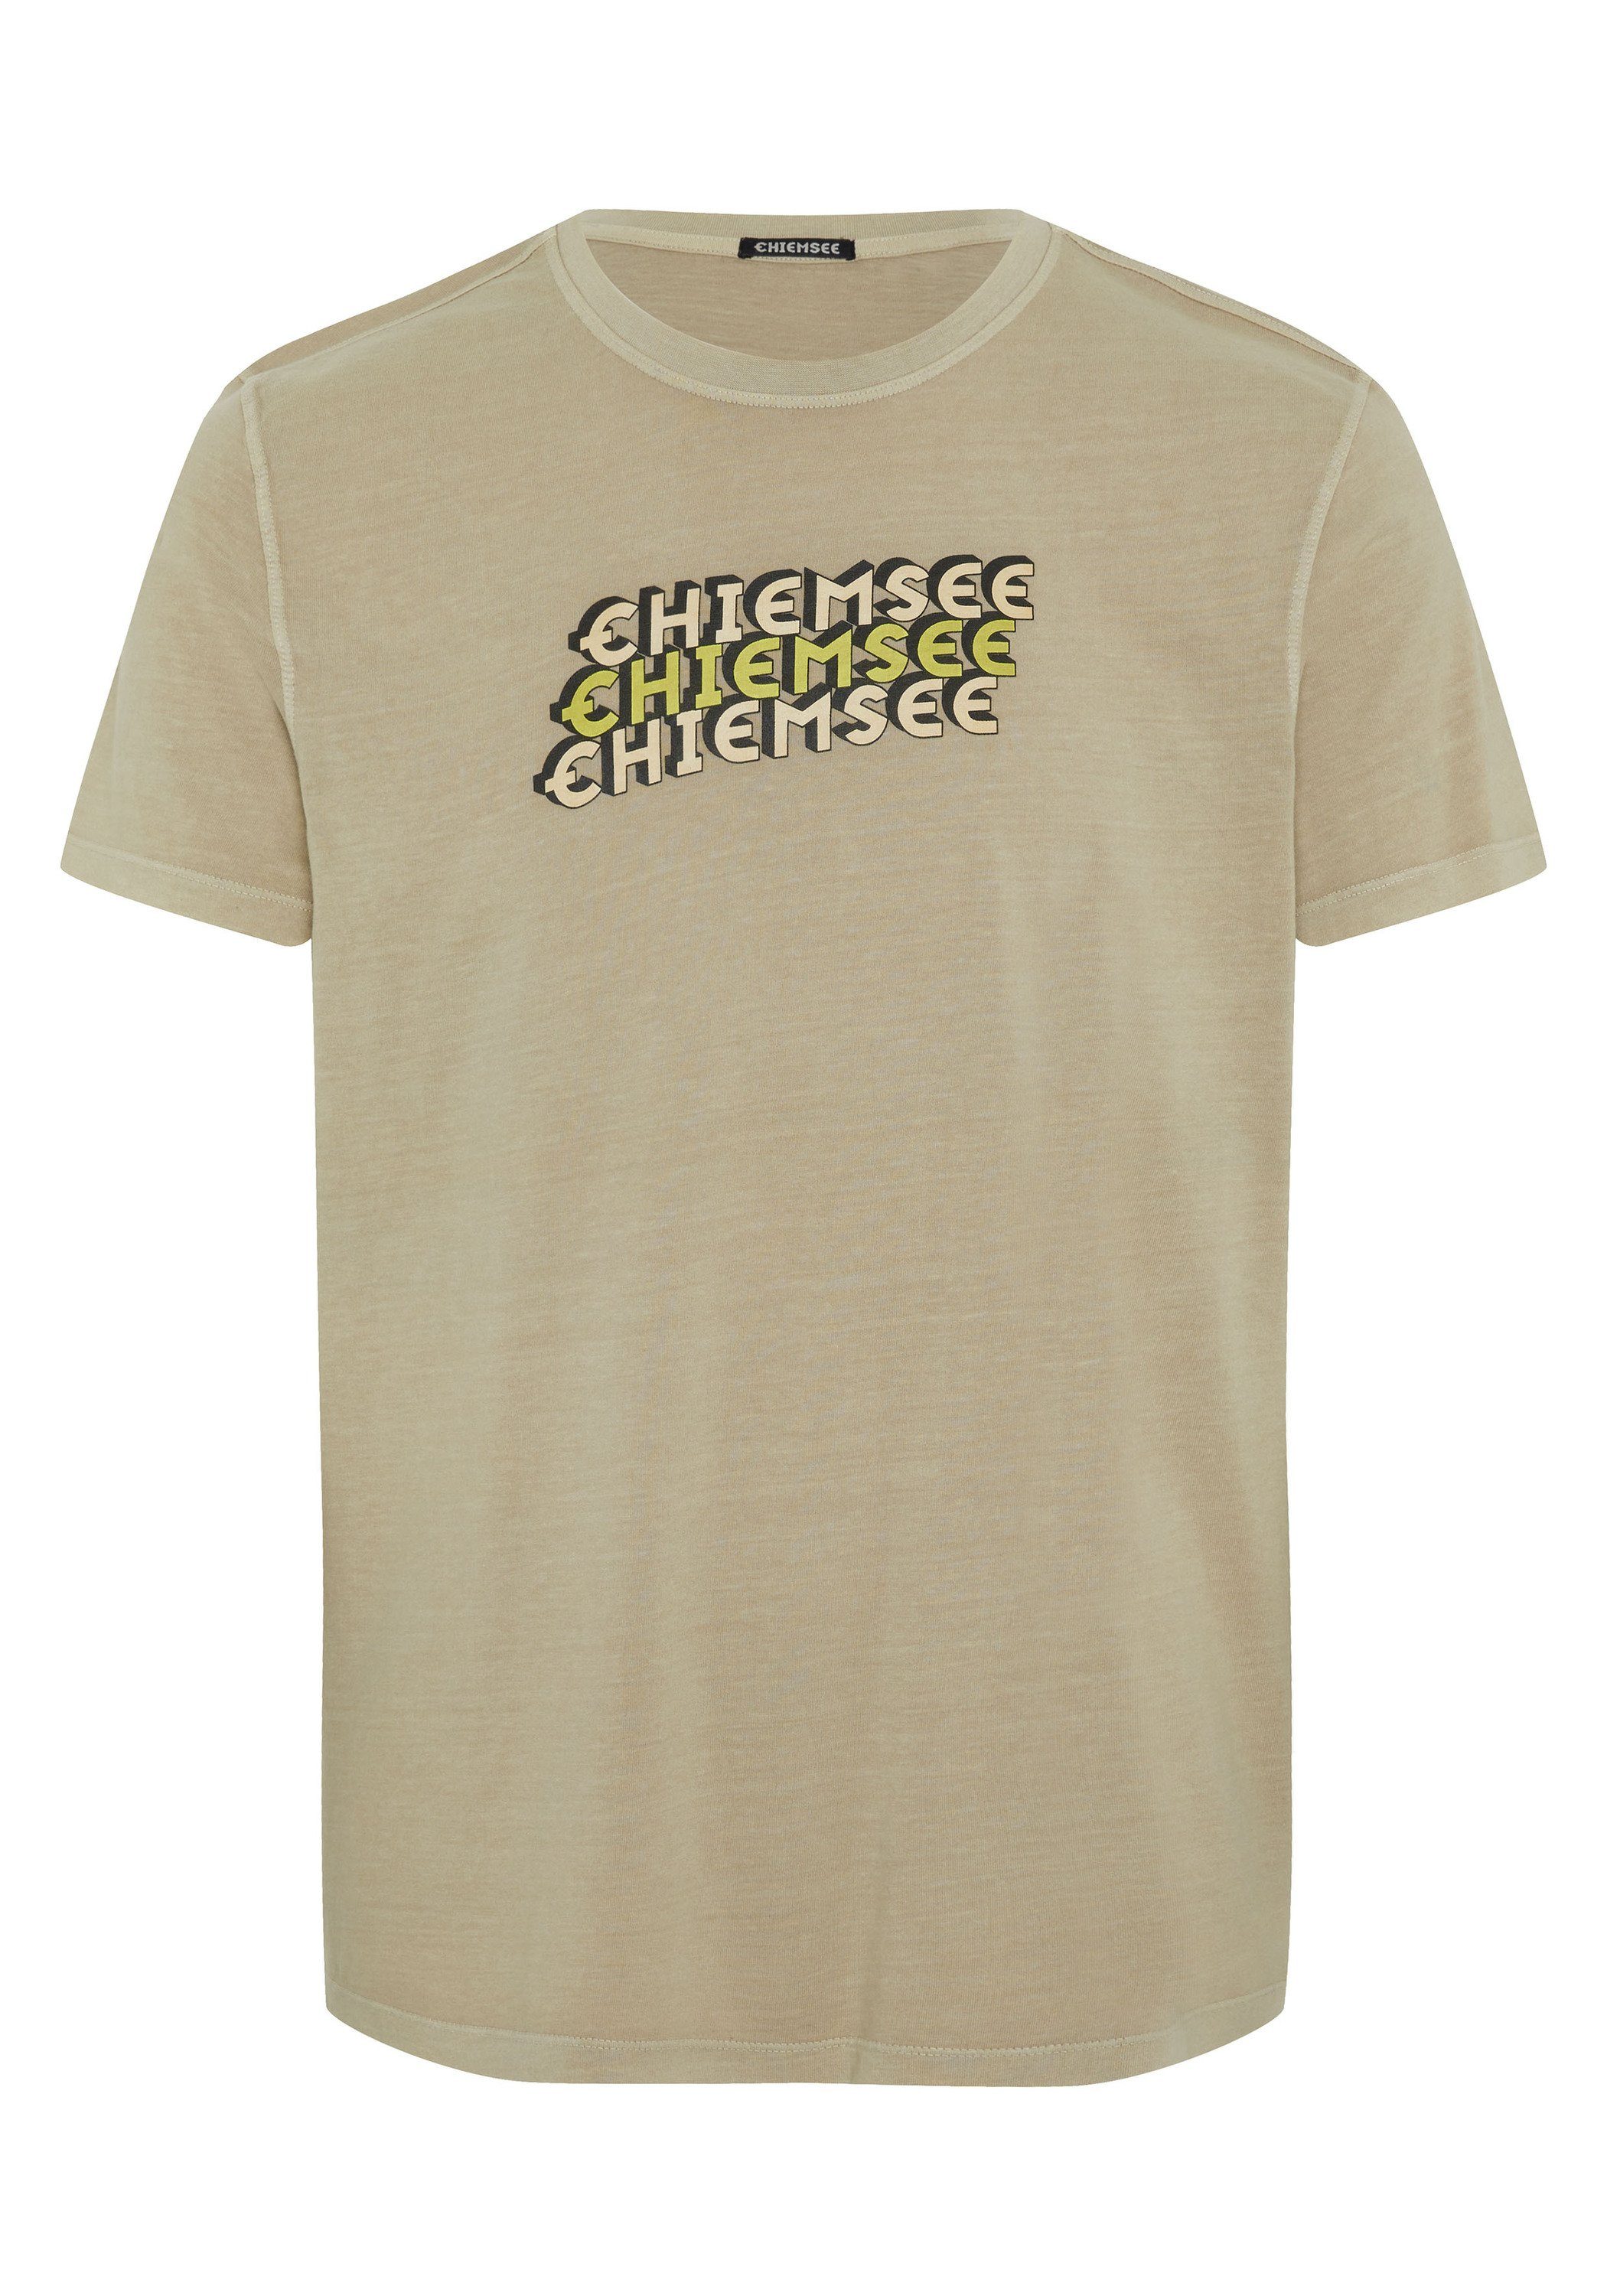 Chiemsee 15-1306 aus Oxford Baumwolljersey Print-Shirt Tan T-Shirt 1